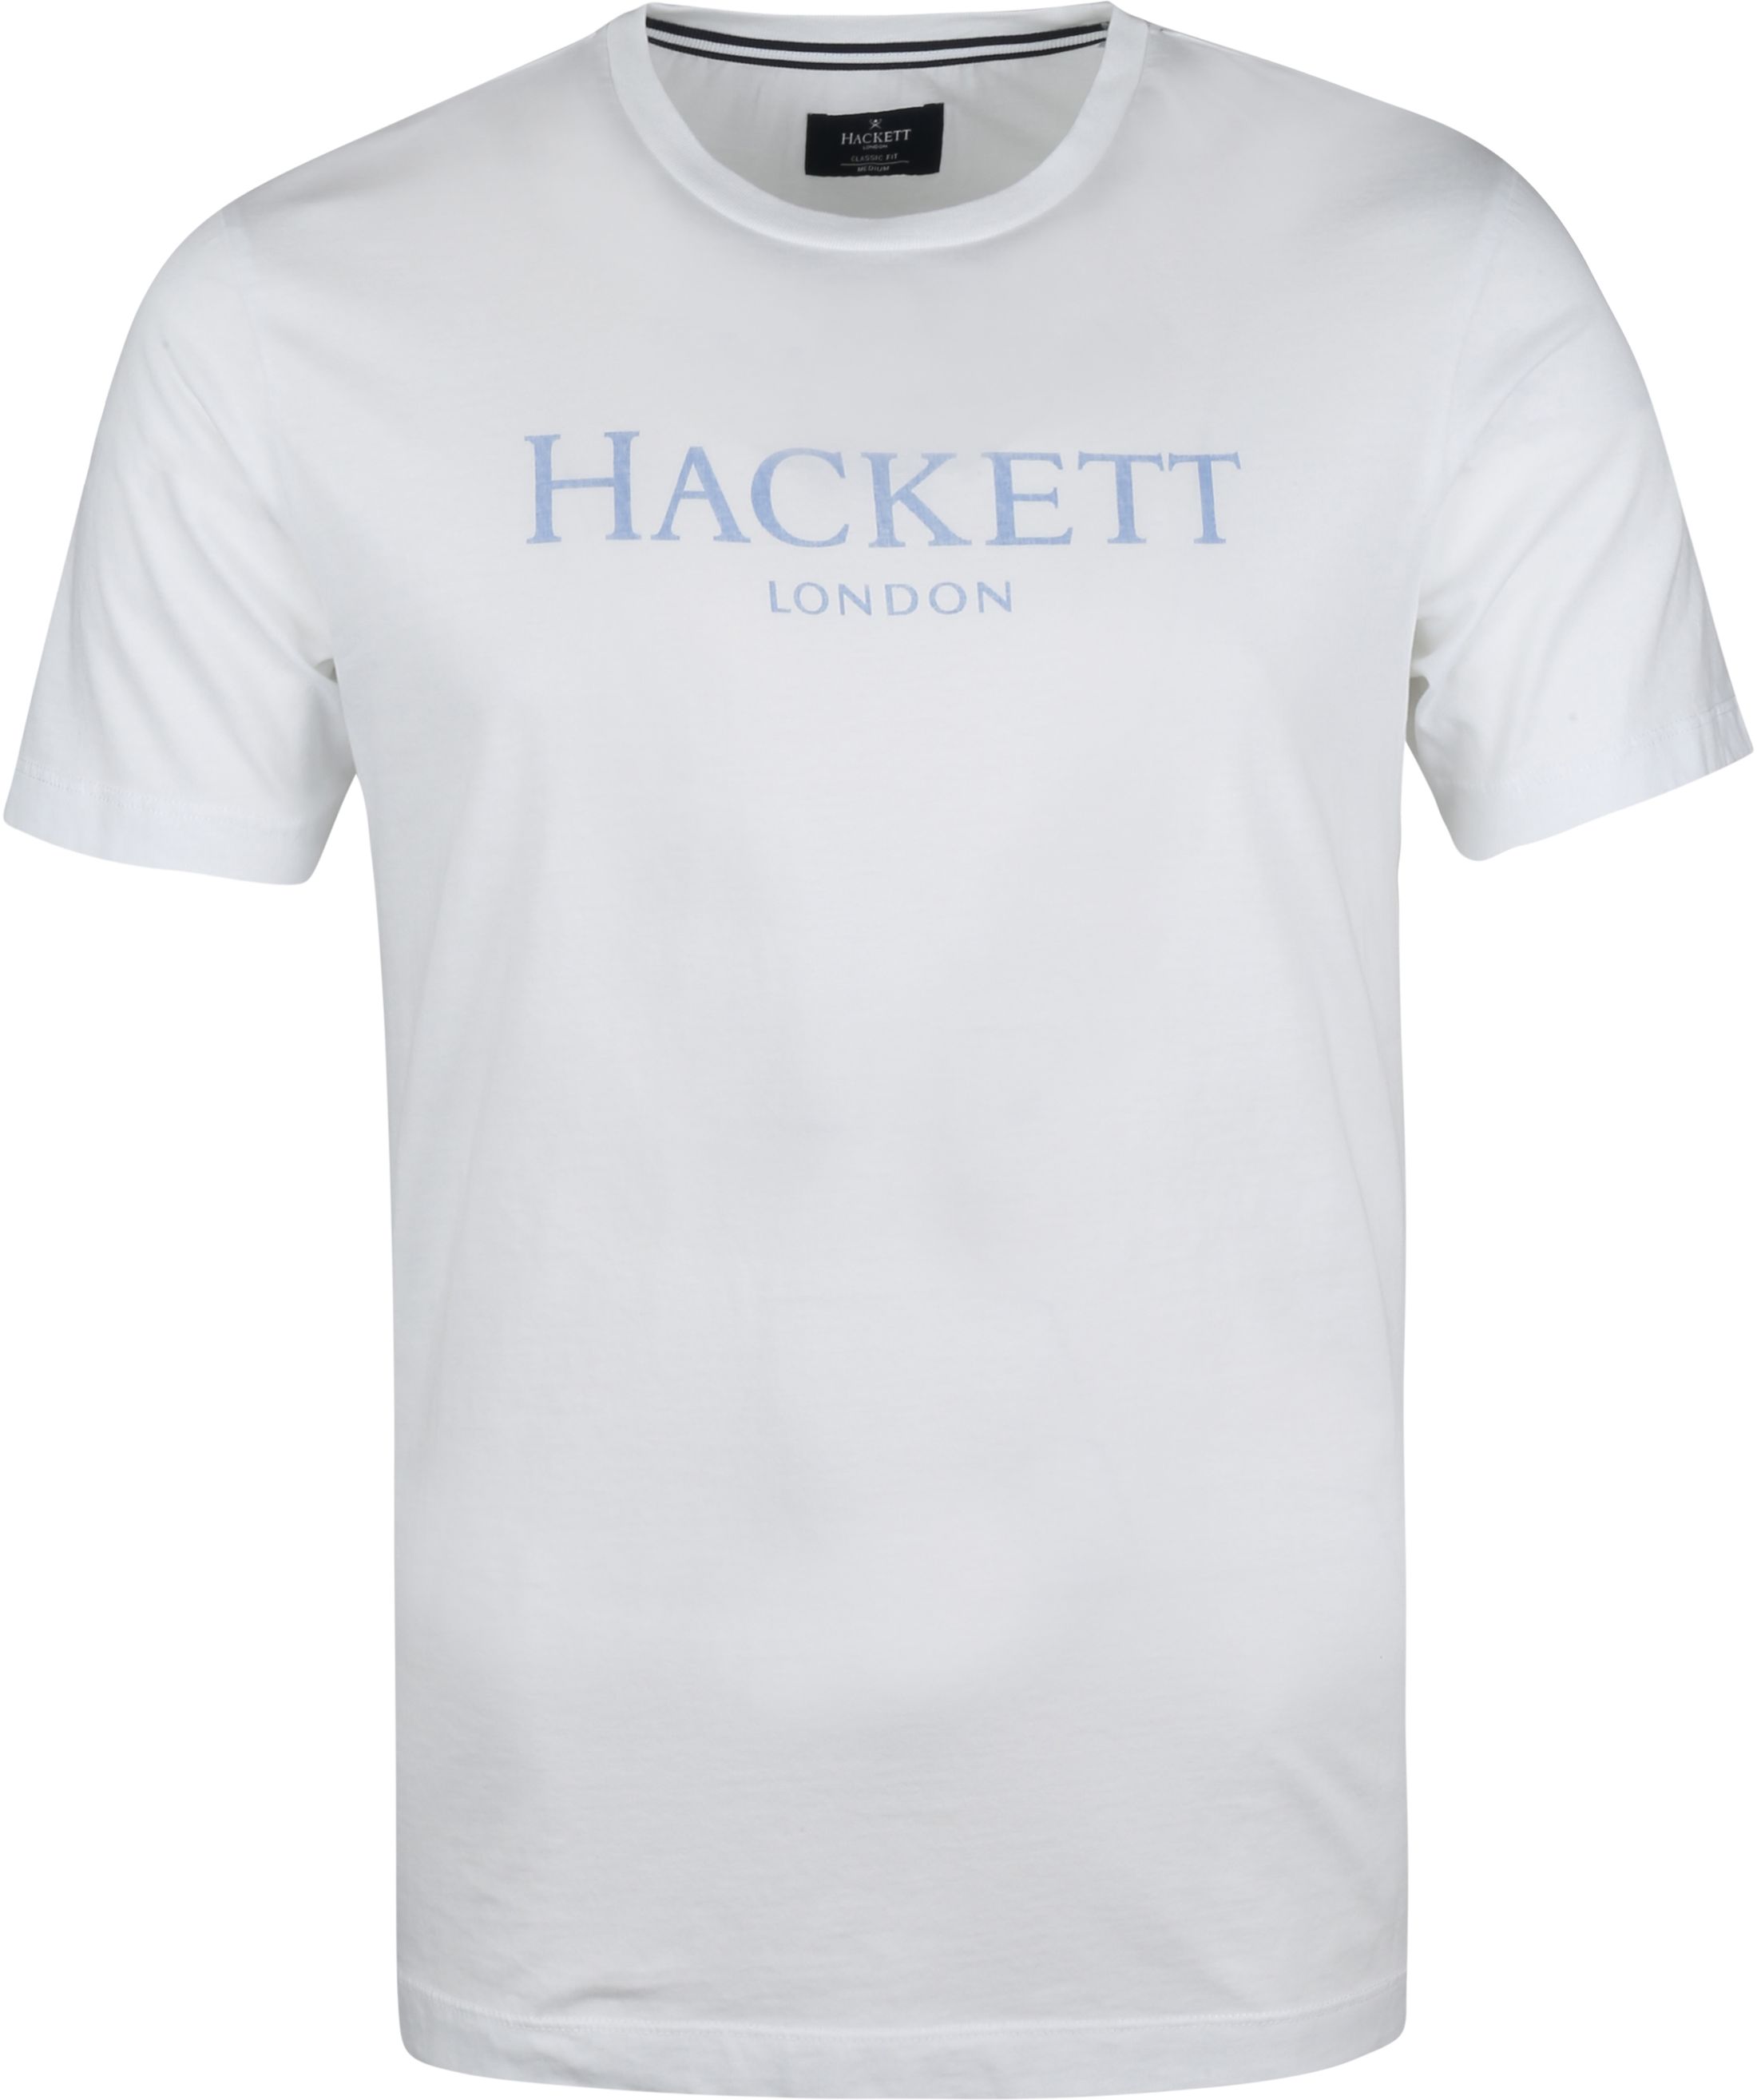 Hackett T-shirt Logo White size L